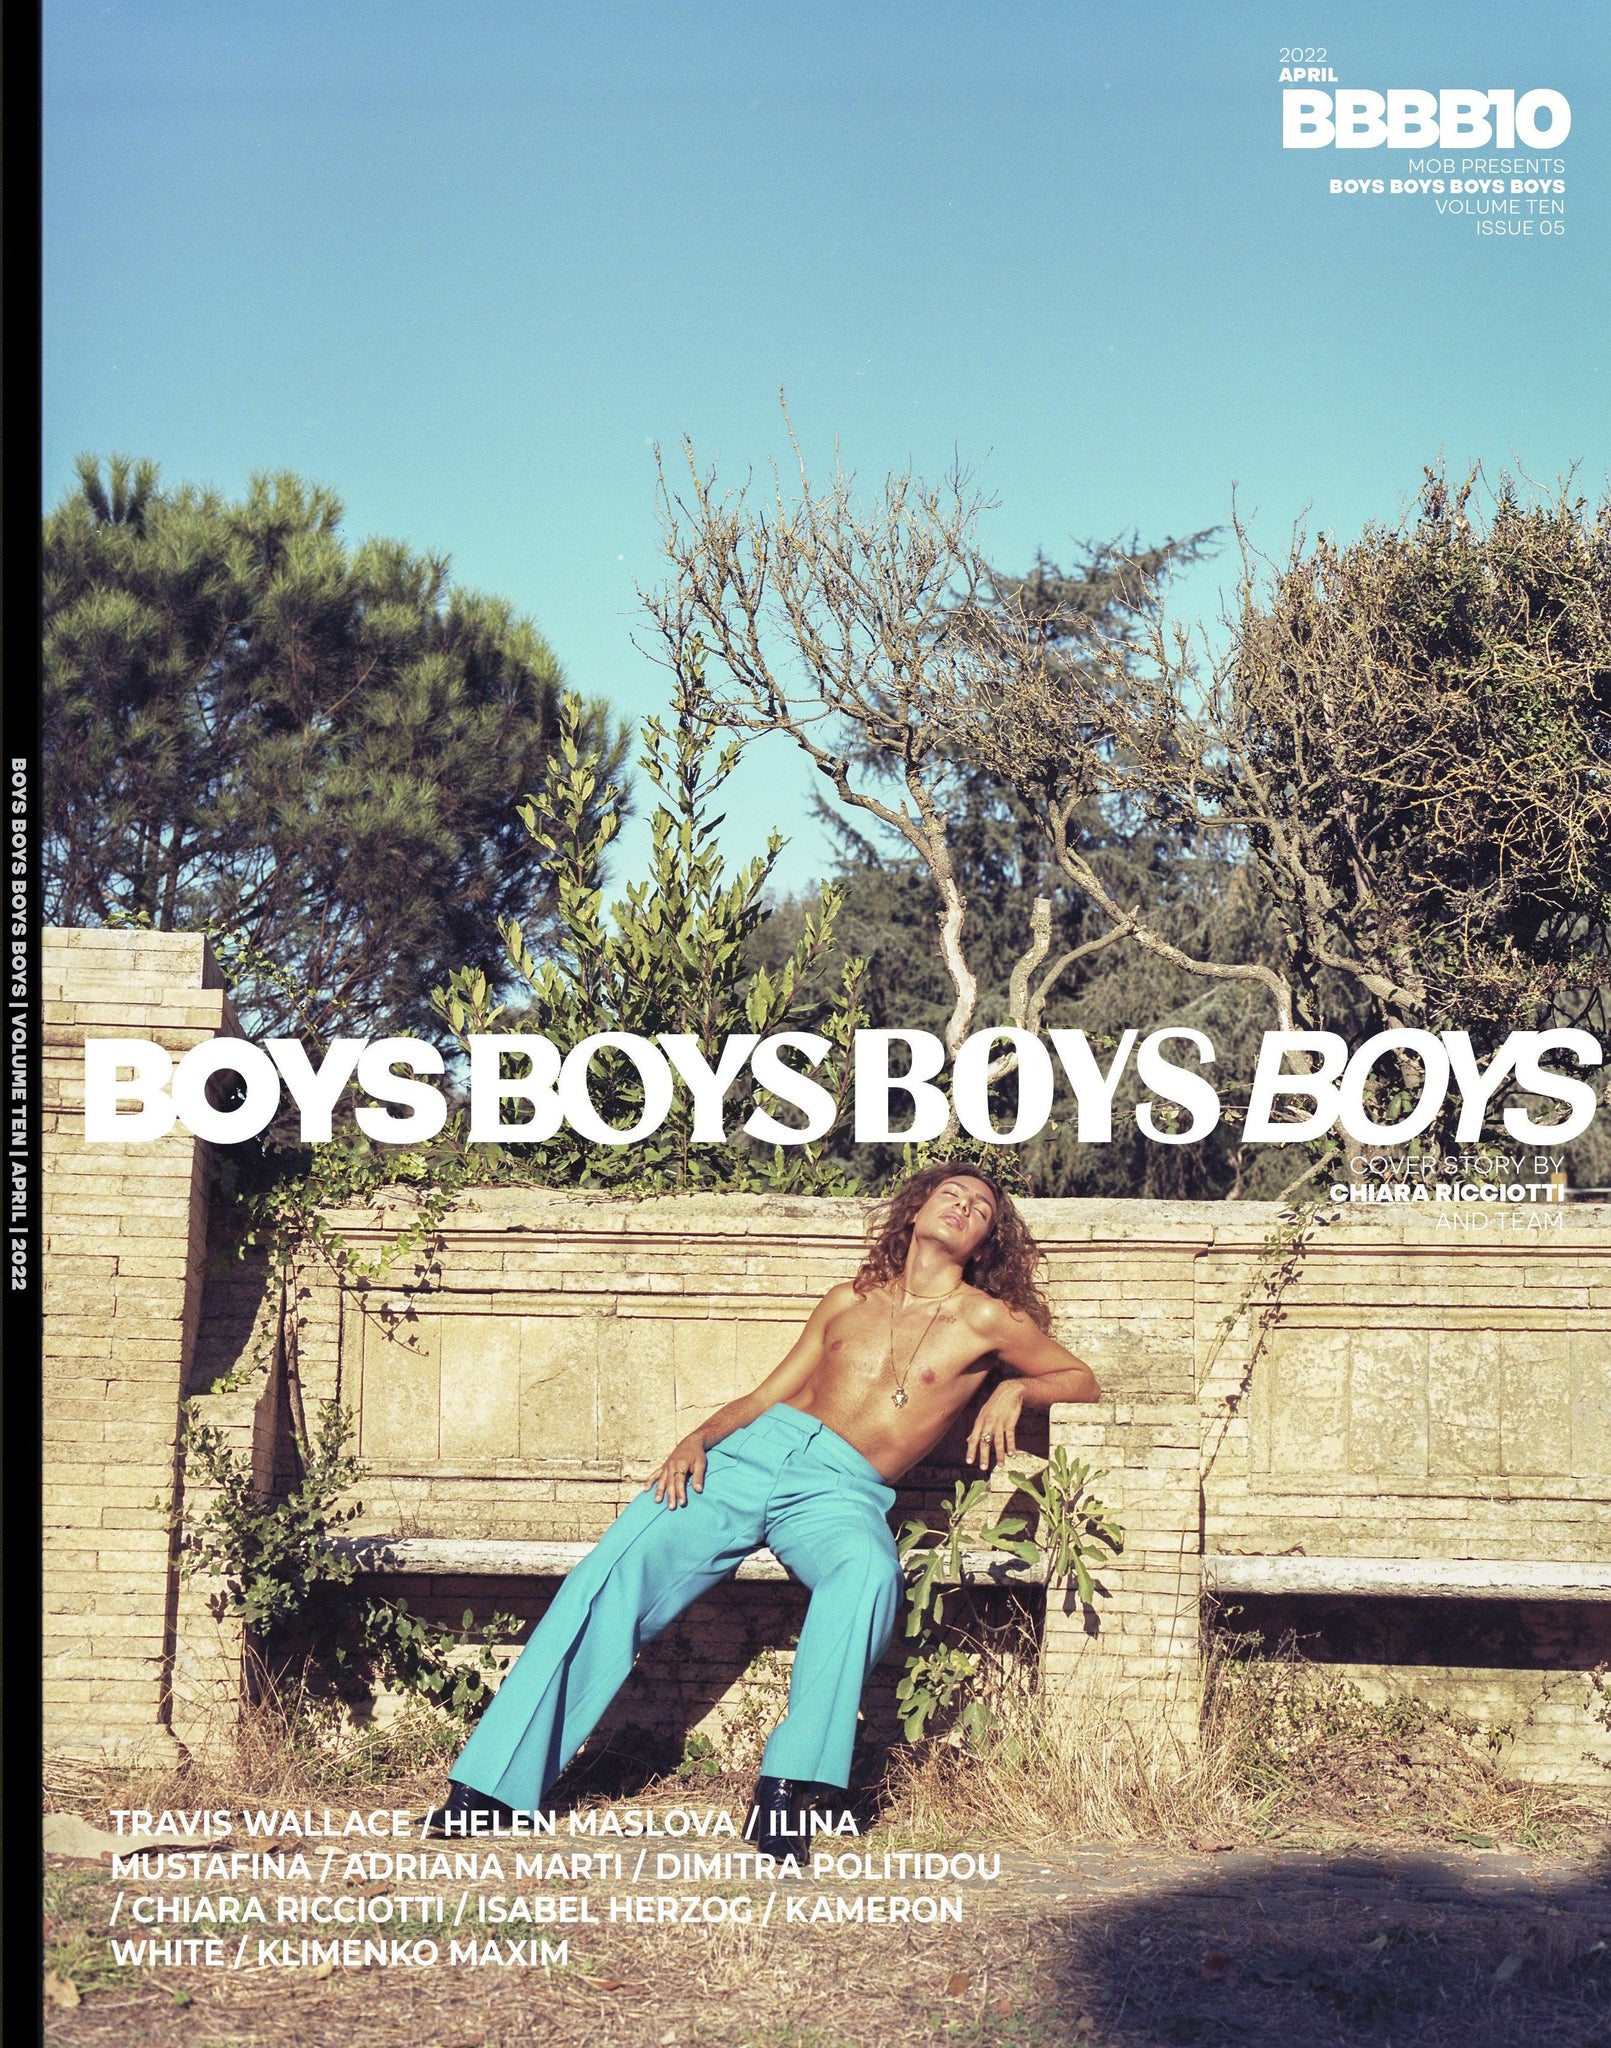 BOYS BOYS BOYS BOYS | VOLUME TEN | ISSUE #05 - Mob Journal